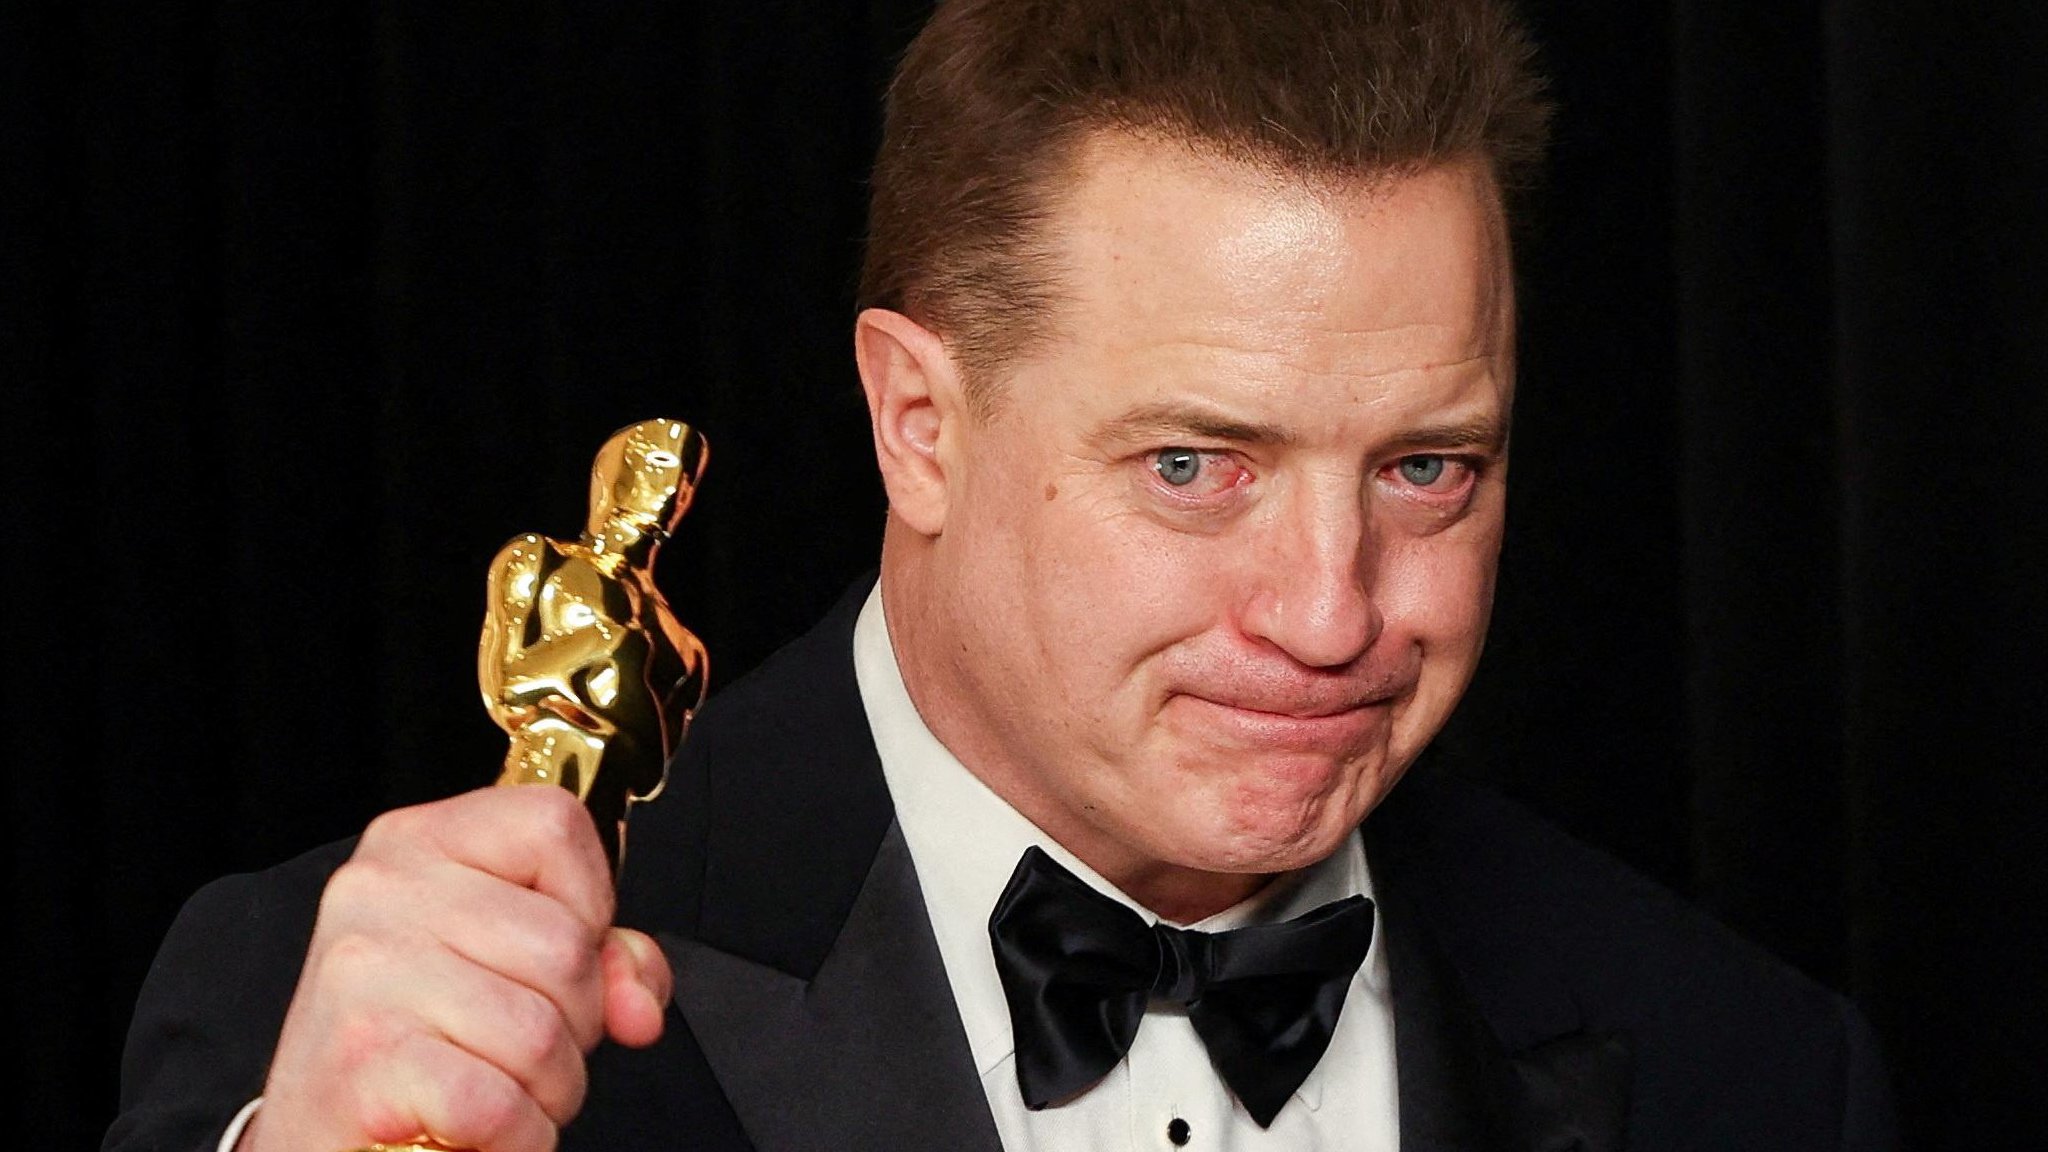 This Oscar-nominated movie star and Hollywood heartthrob looks